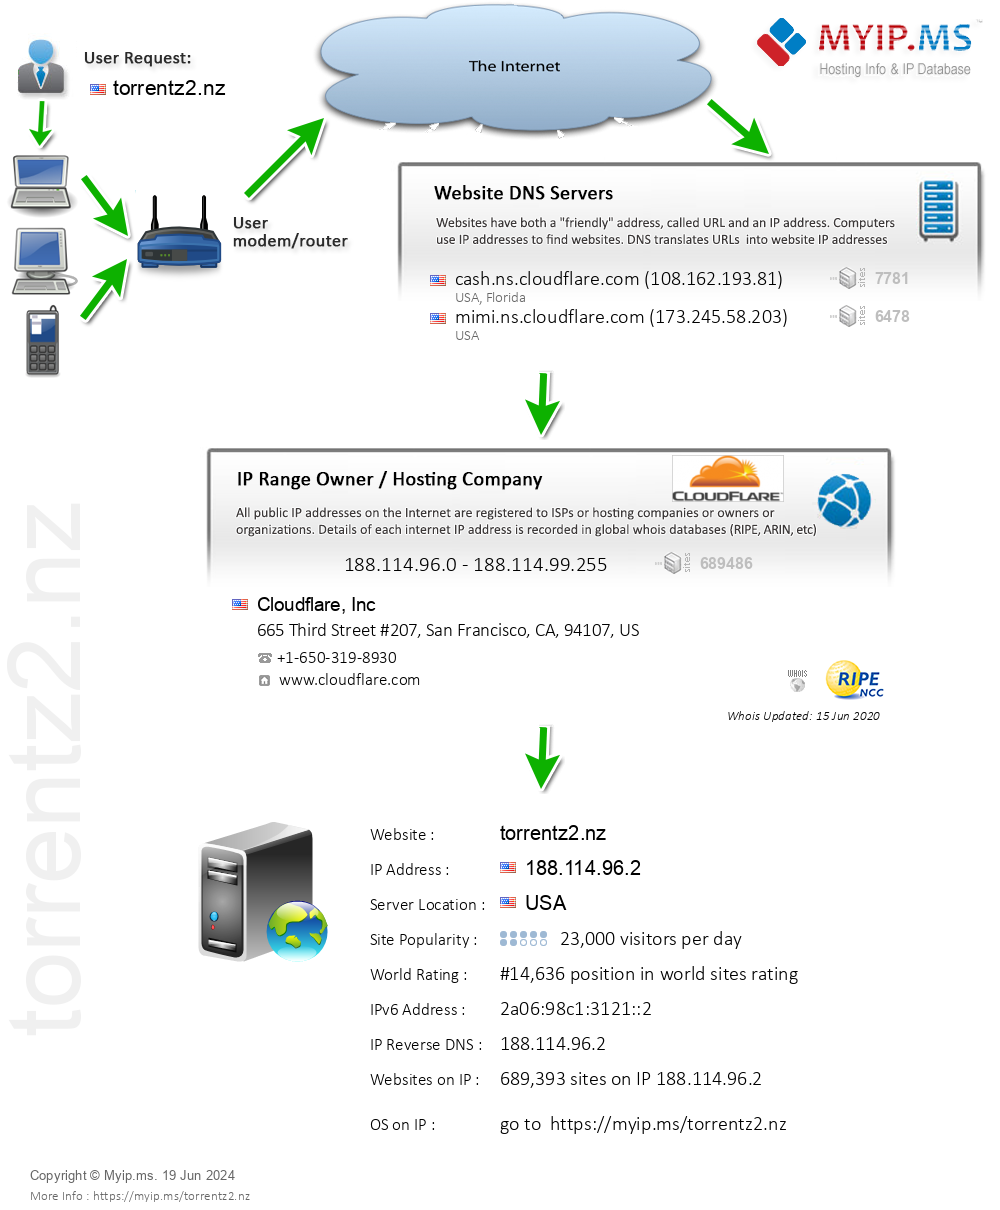 Torrentz2.nz - Website Hosting Visual IP Diagram